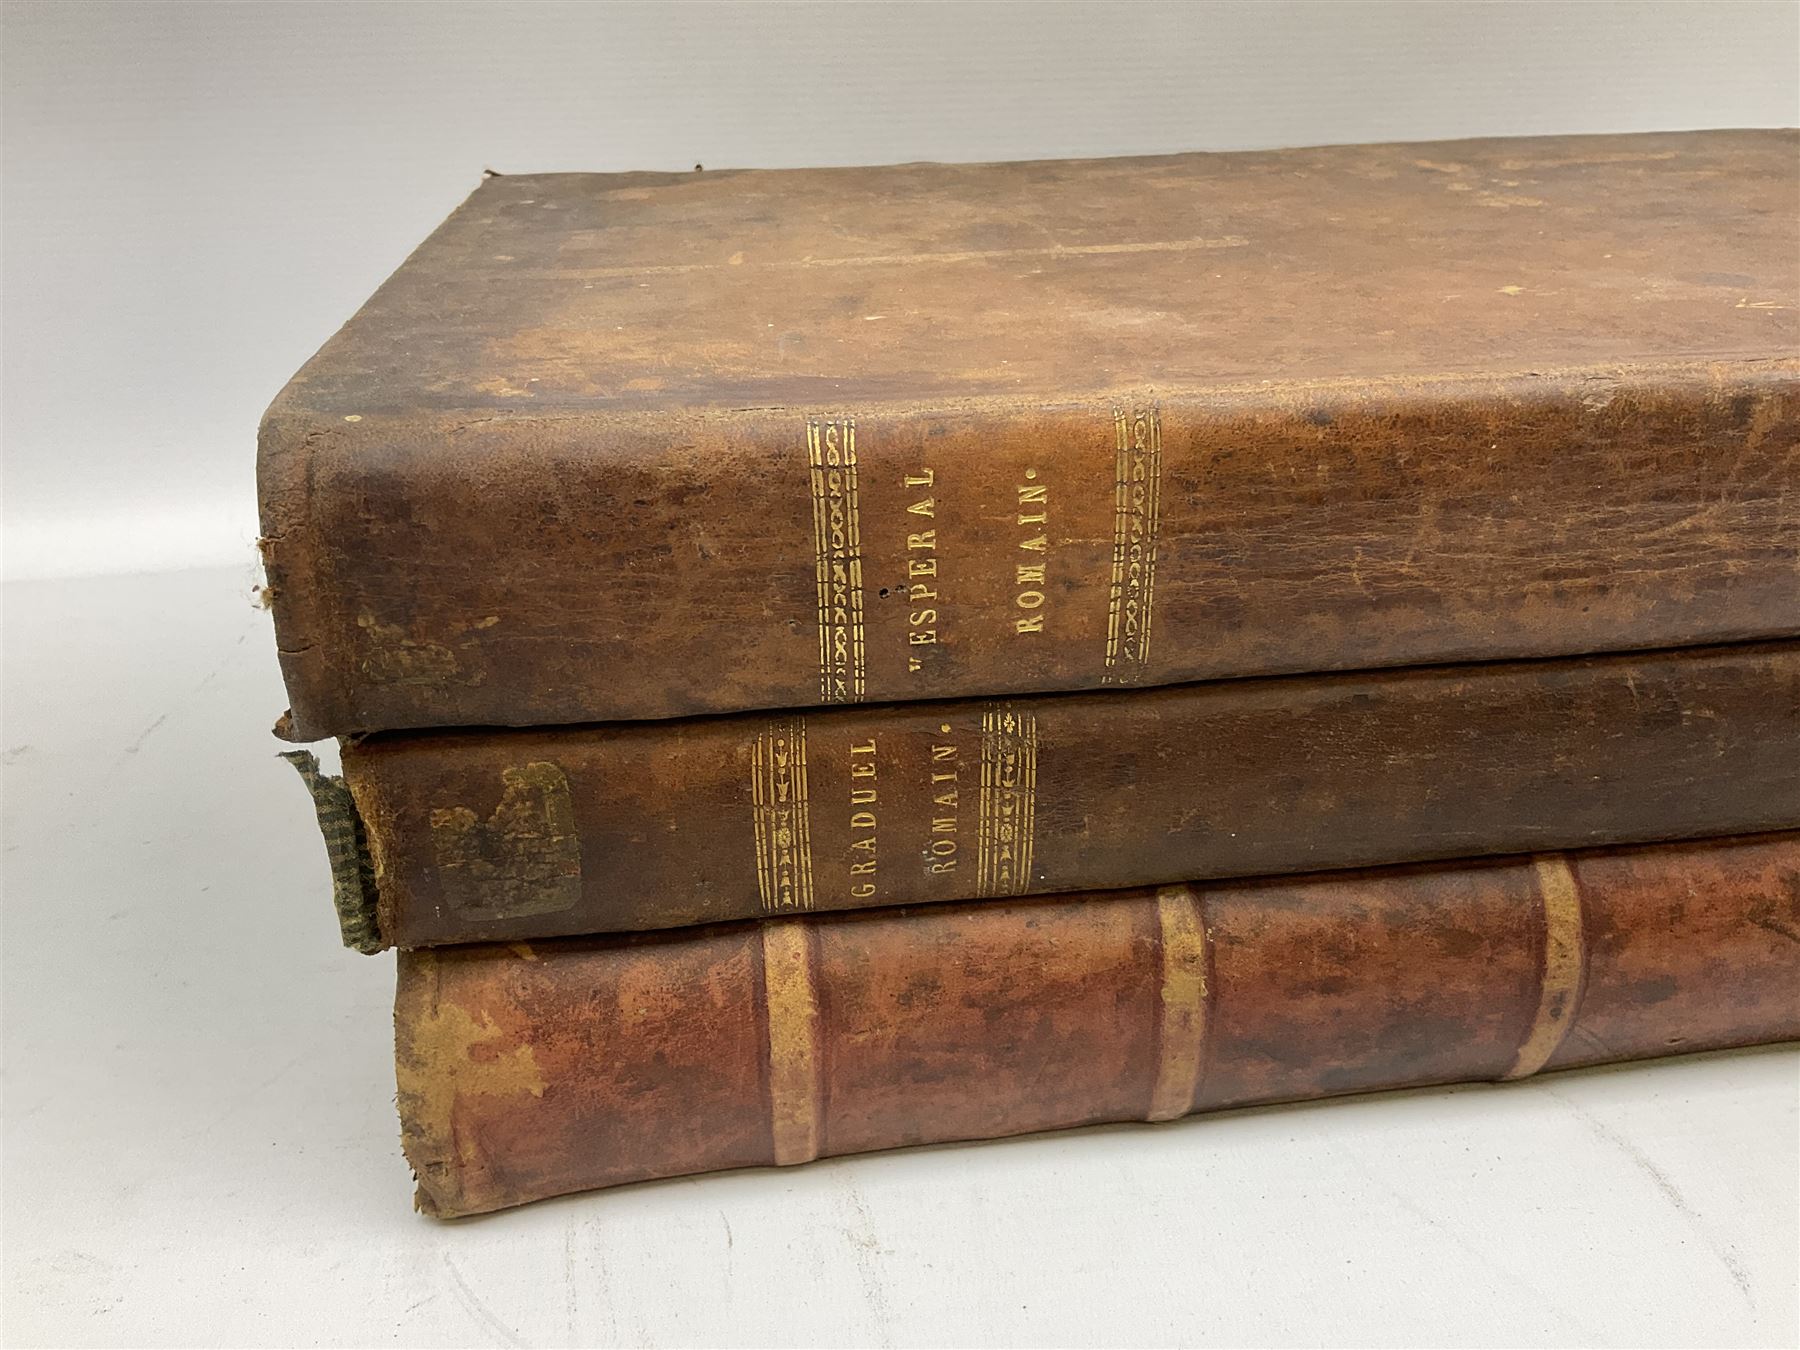 Six 19th century leather bound books of music comprising Graduale Juxta Missale Romanum and Antiphon - Image 2 of 21